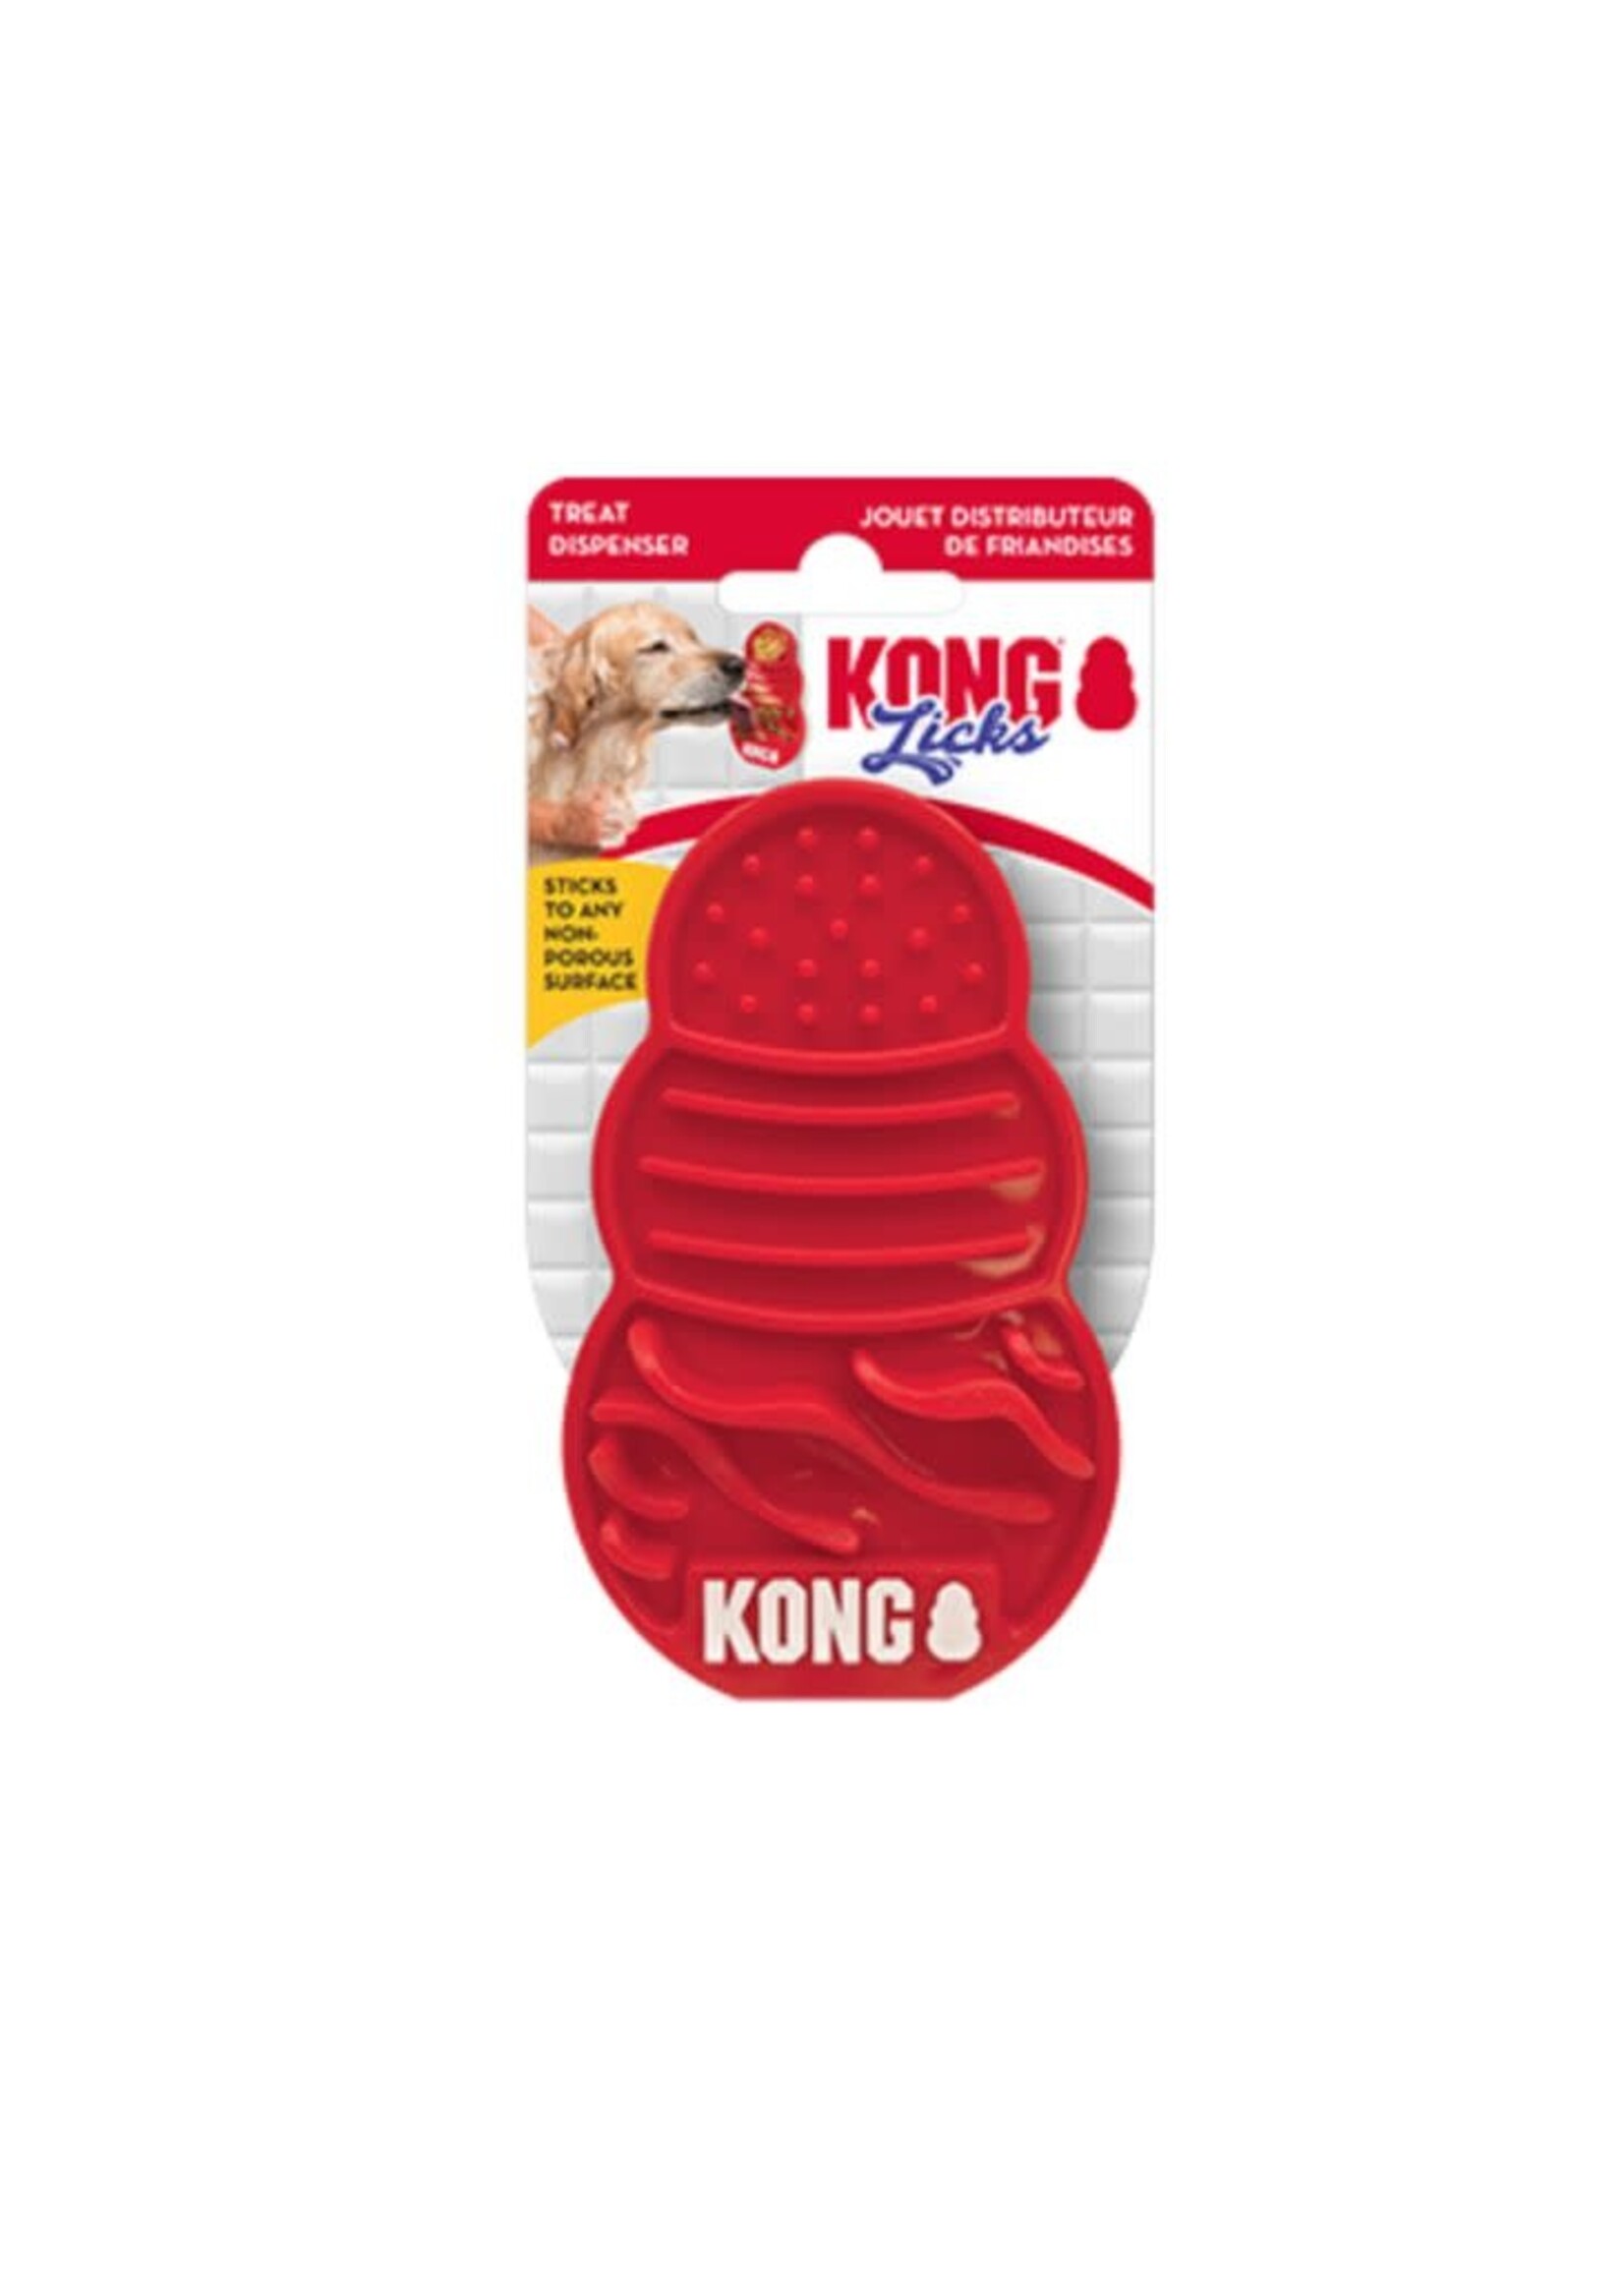 Kong® Licks Small for Dogs